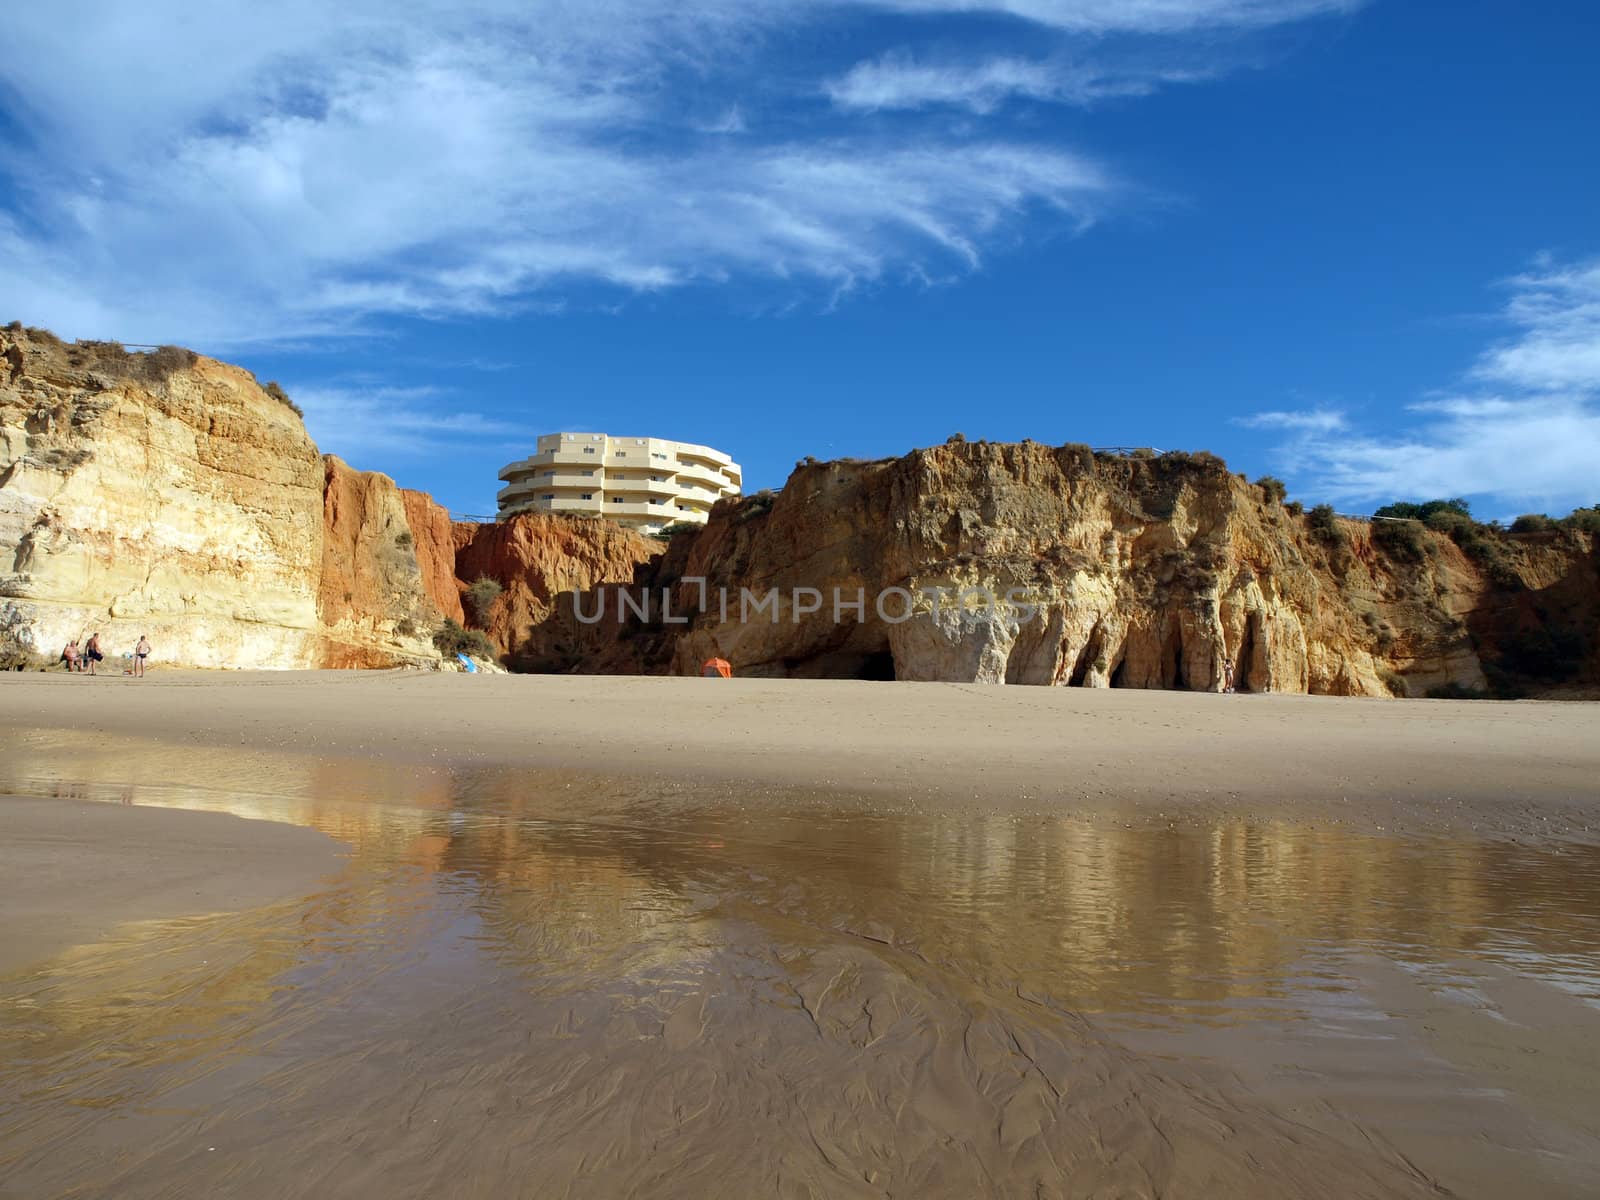 Portimao-resort on the Atlantic coast of the Algarve, Portugal